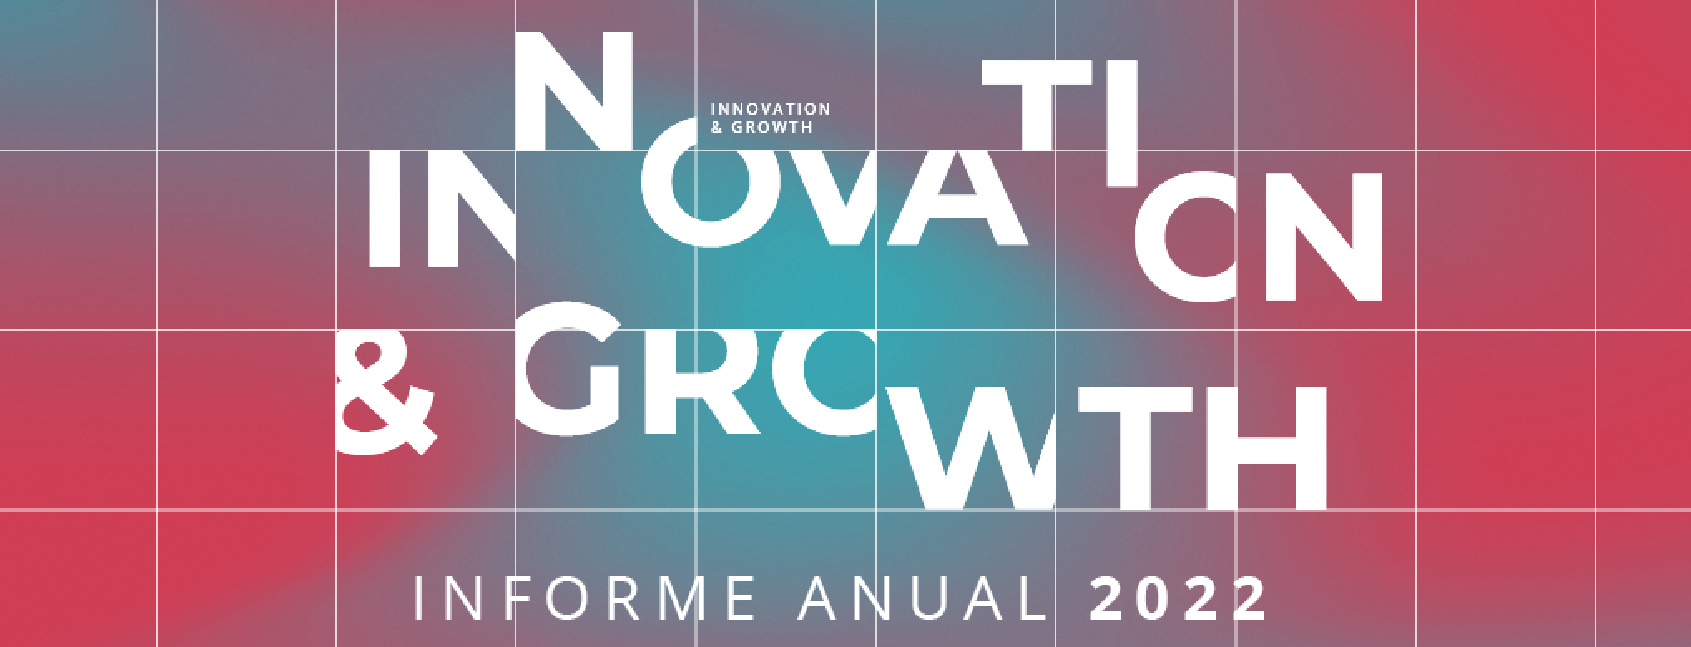 LLYC apresenta o seu Relatório Anual 2022, “Innovation & Growth”